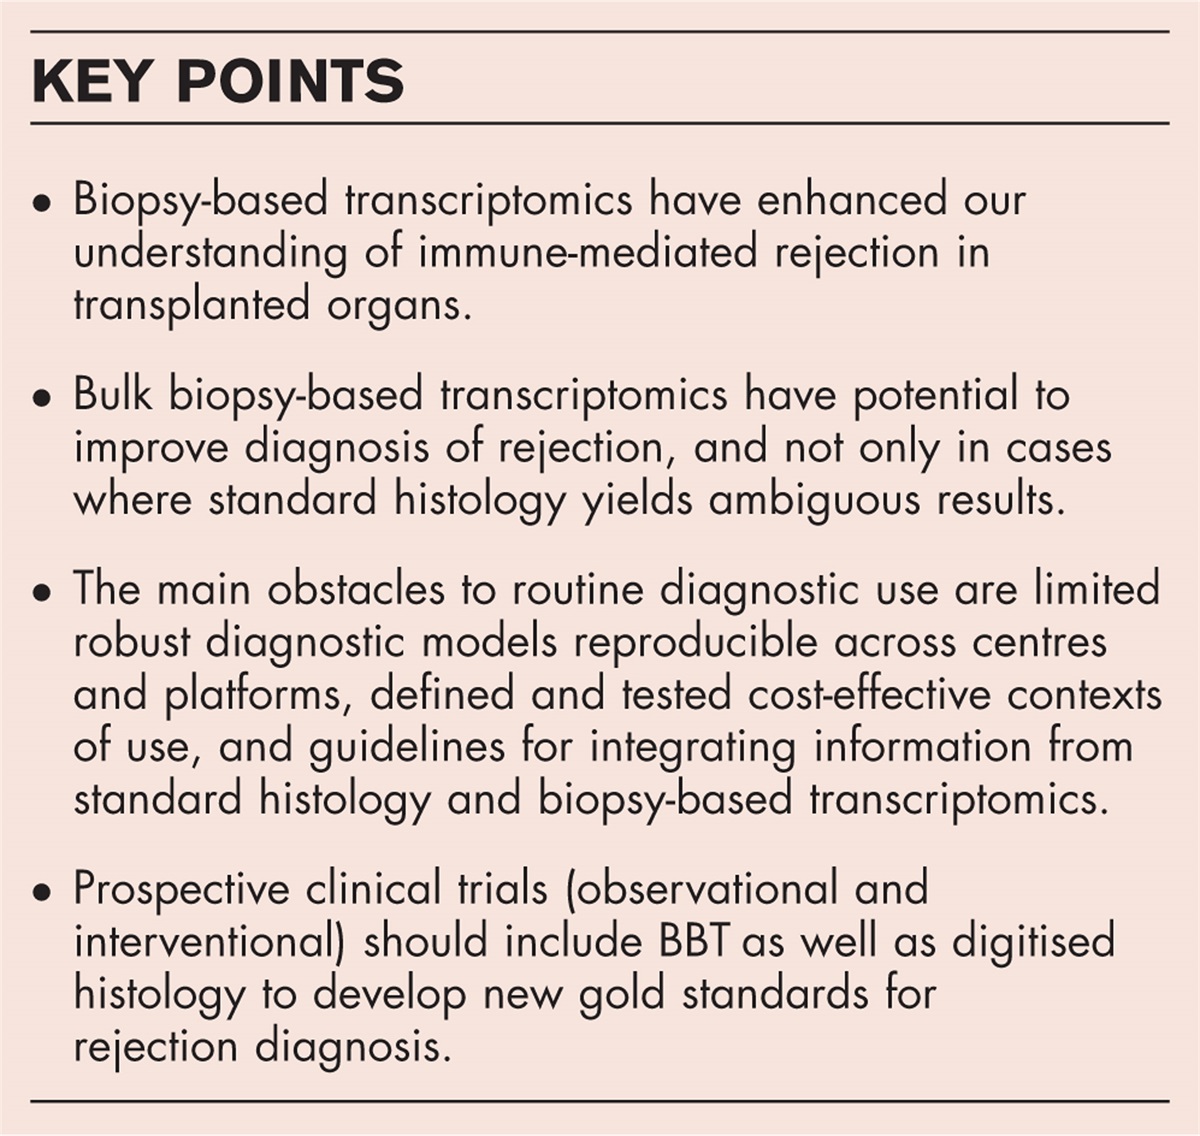 Biopsy-based transcriptomics in the diagnosis of kidney transplant rejection